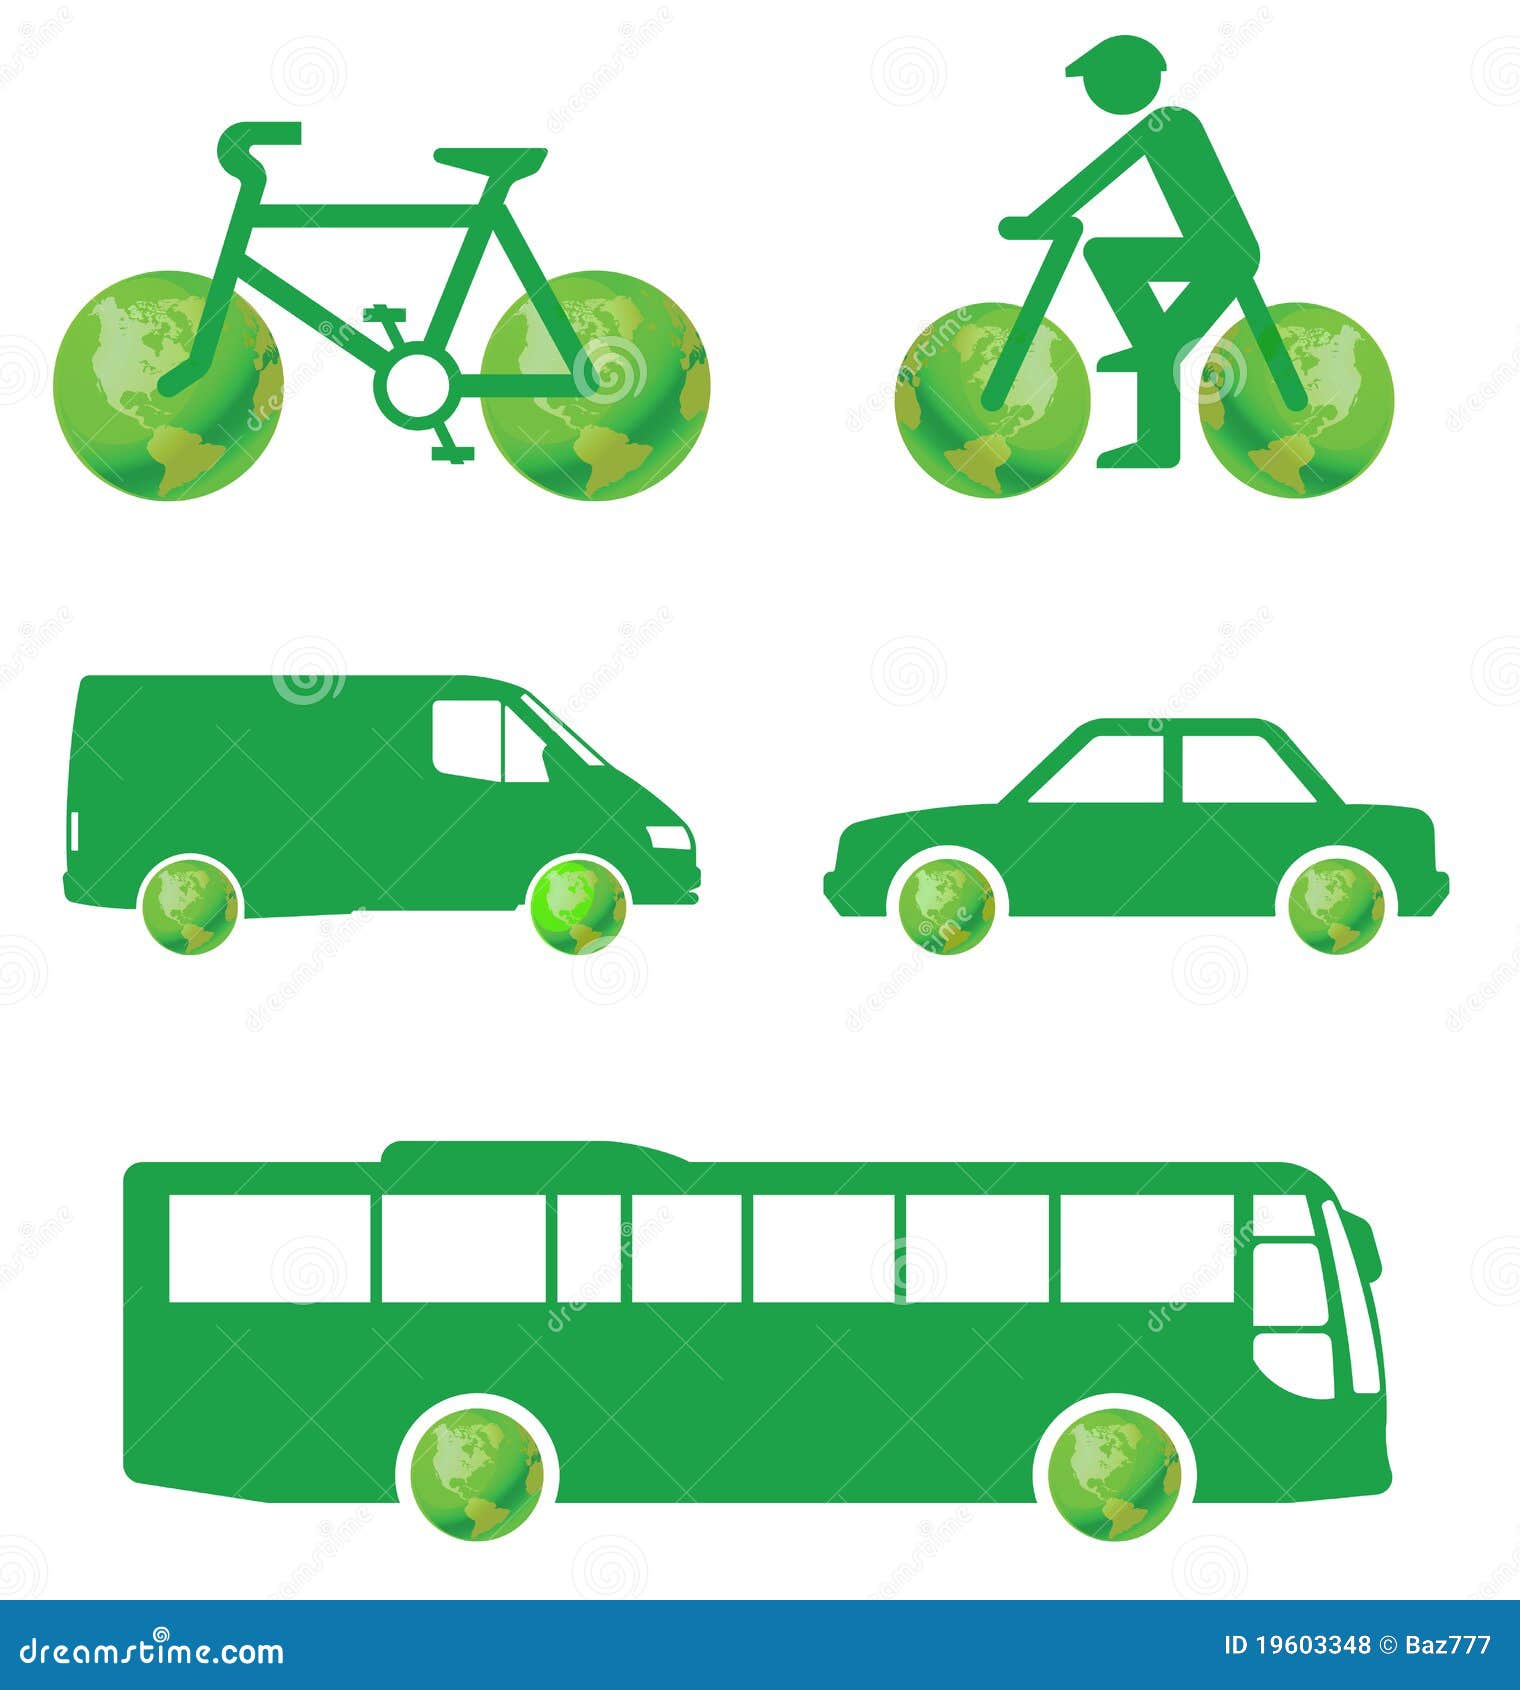 Sustainable transport